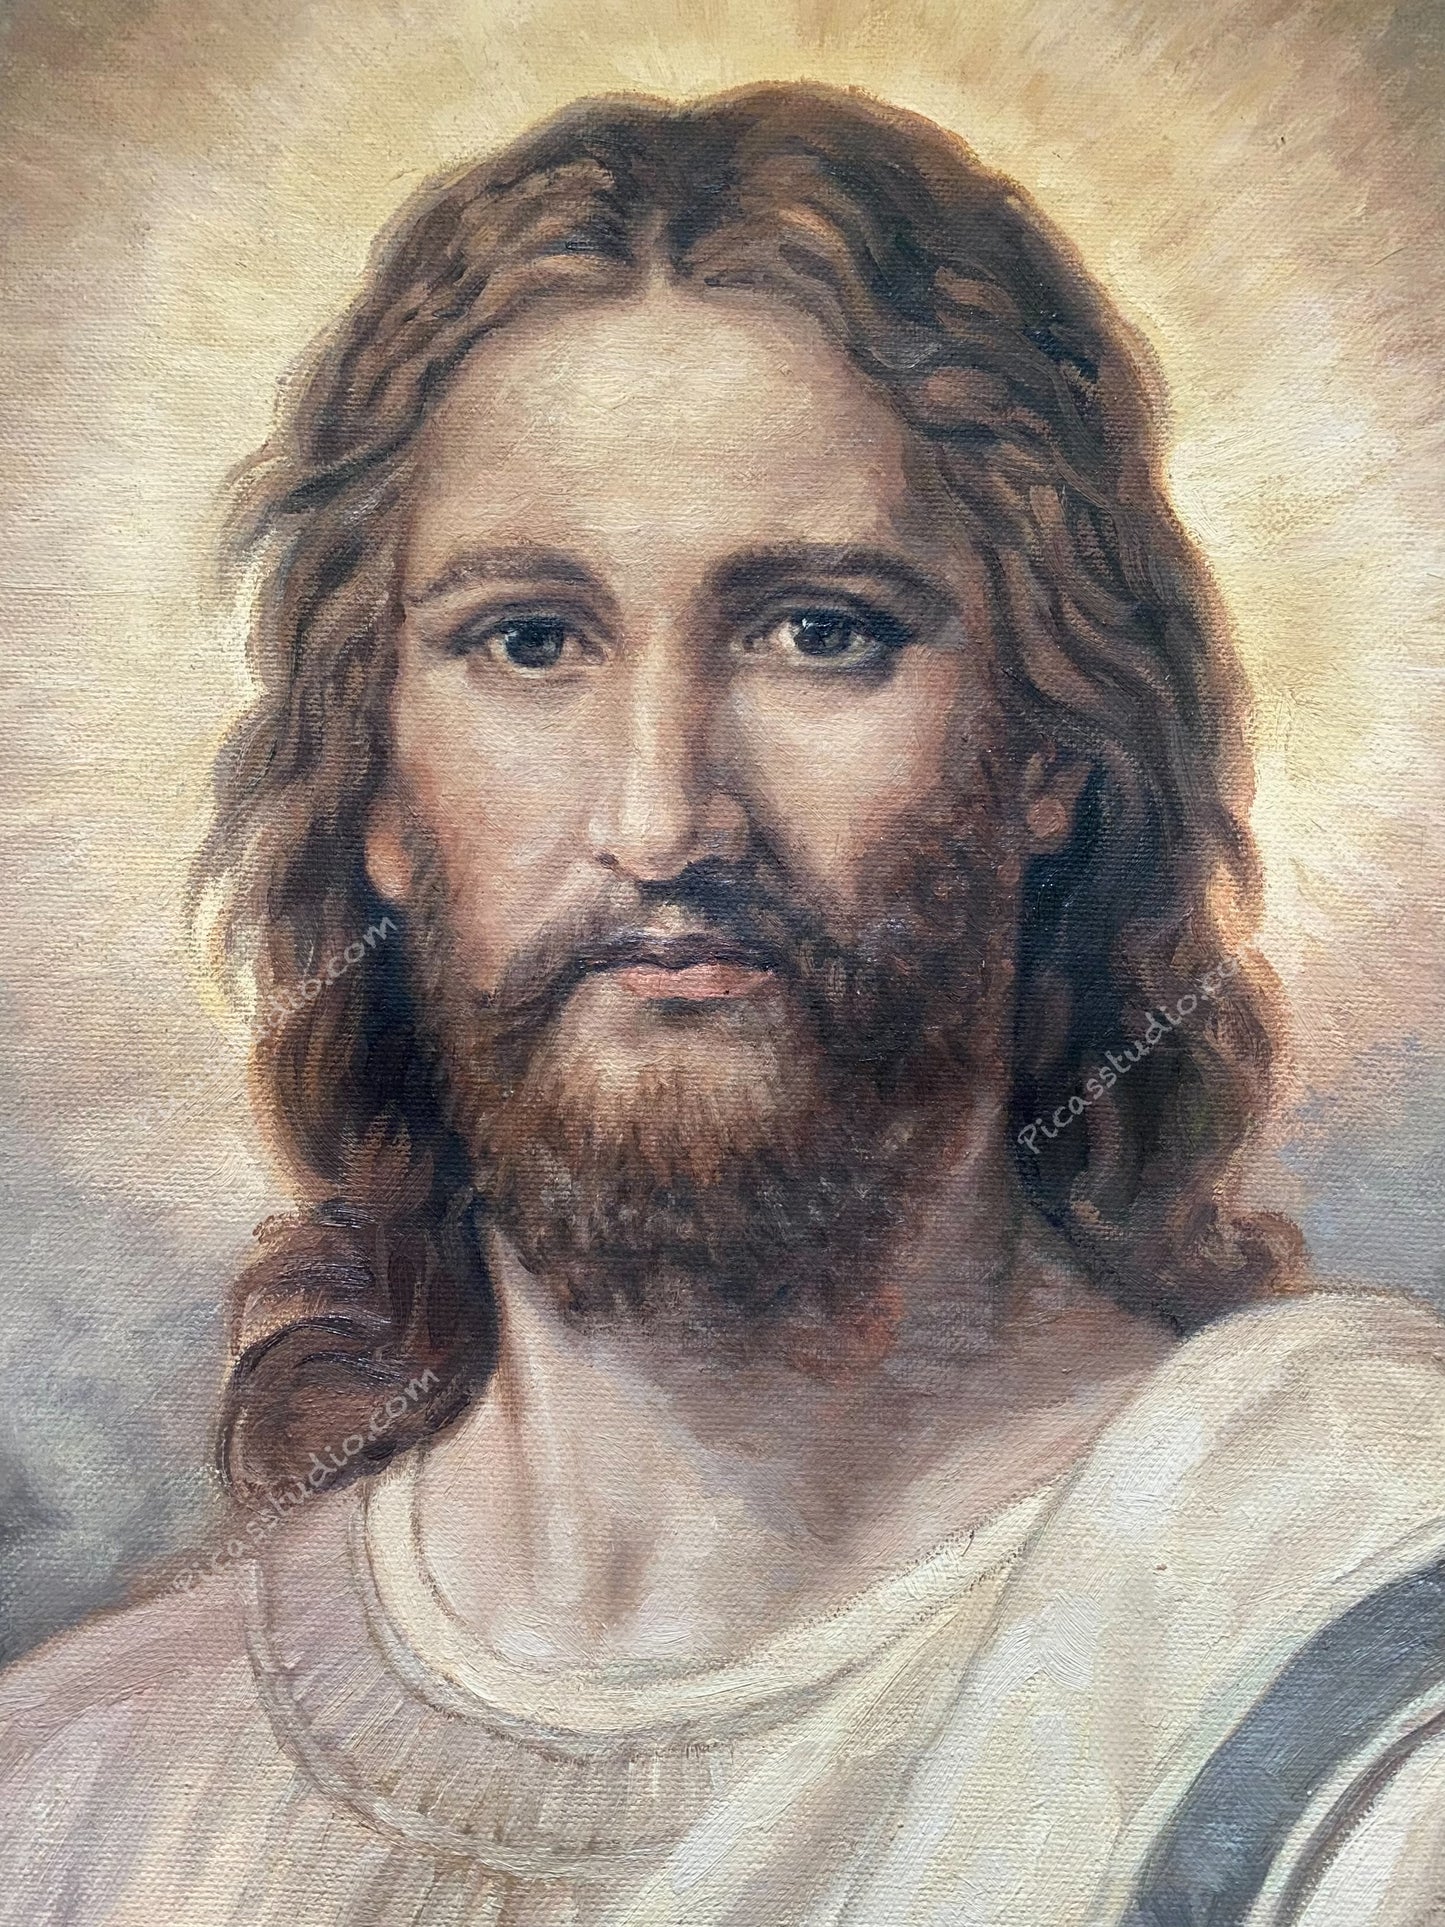 Jesus Christ by Heinrich Hofmann Portrait Oil Painting Hand Painted Art on Canvas Wall Decor Unframed